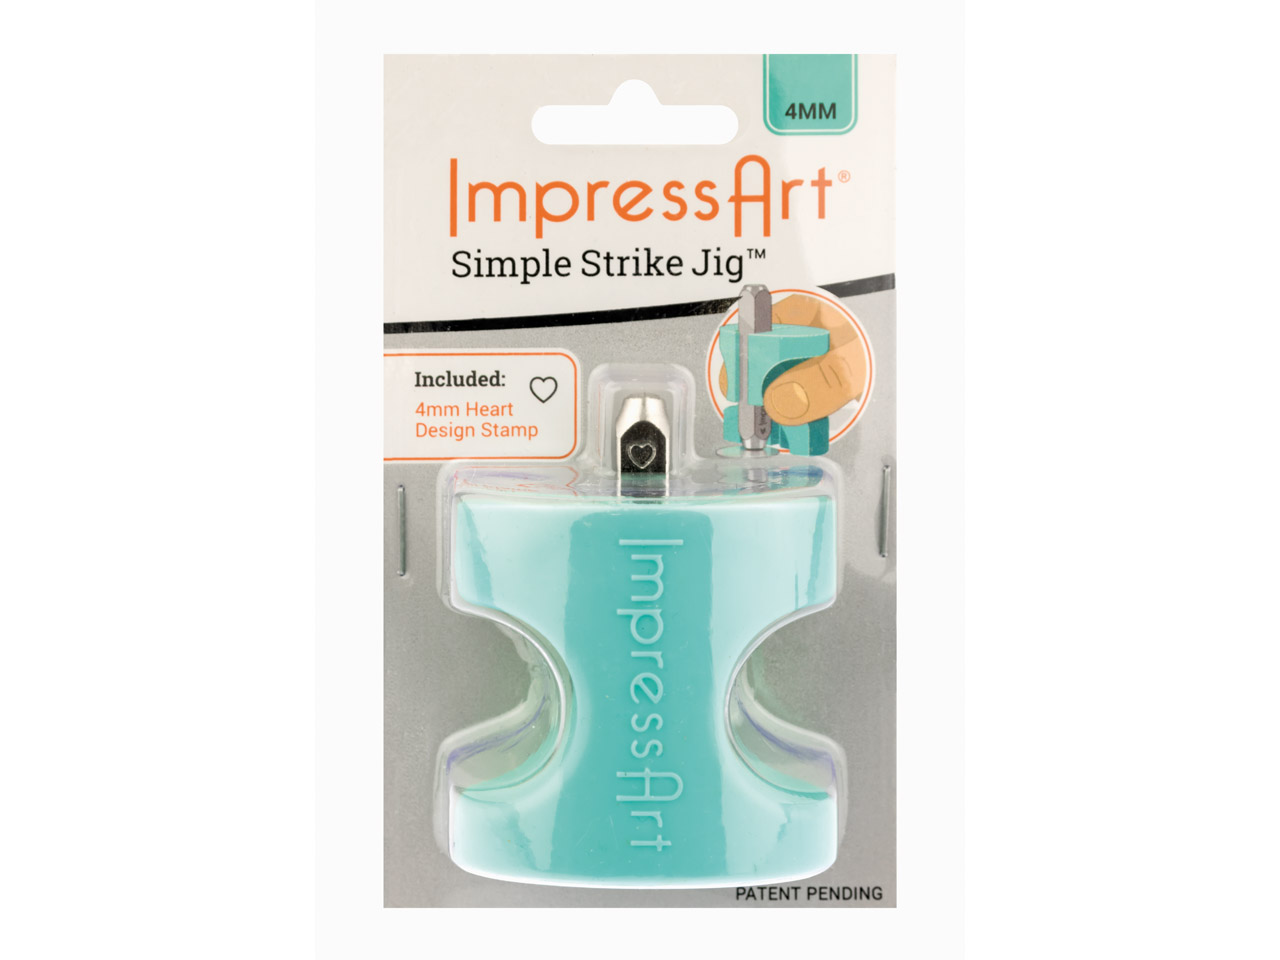 ImpressArt Simple Strike Jig 4mm   Plus Free Heart Design Stamp - Standard Image - 3